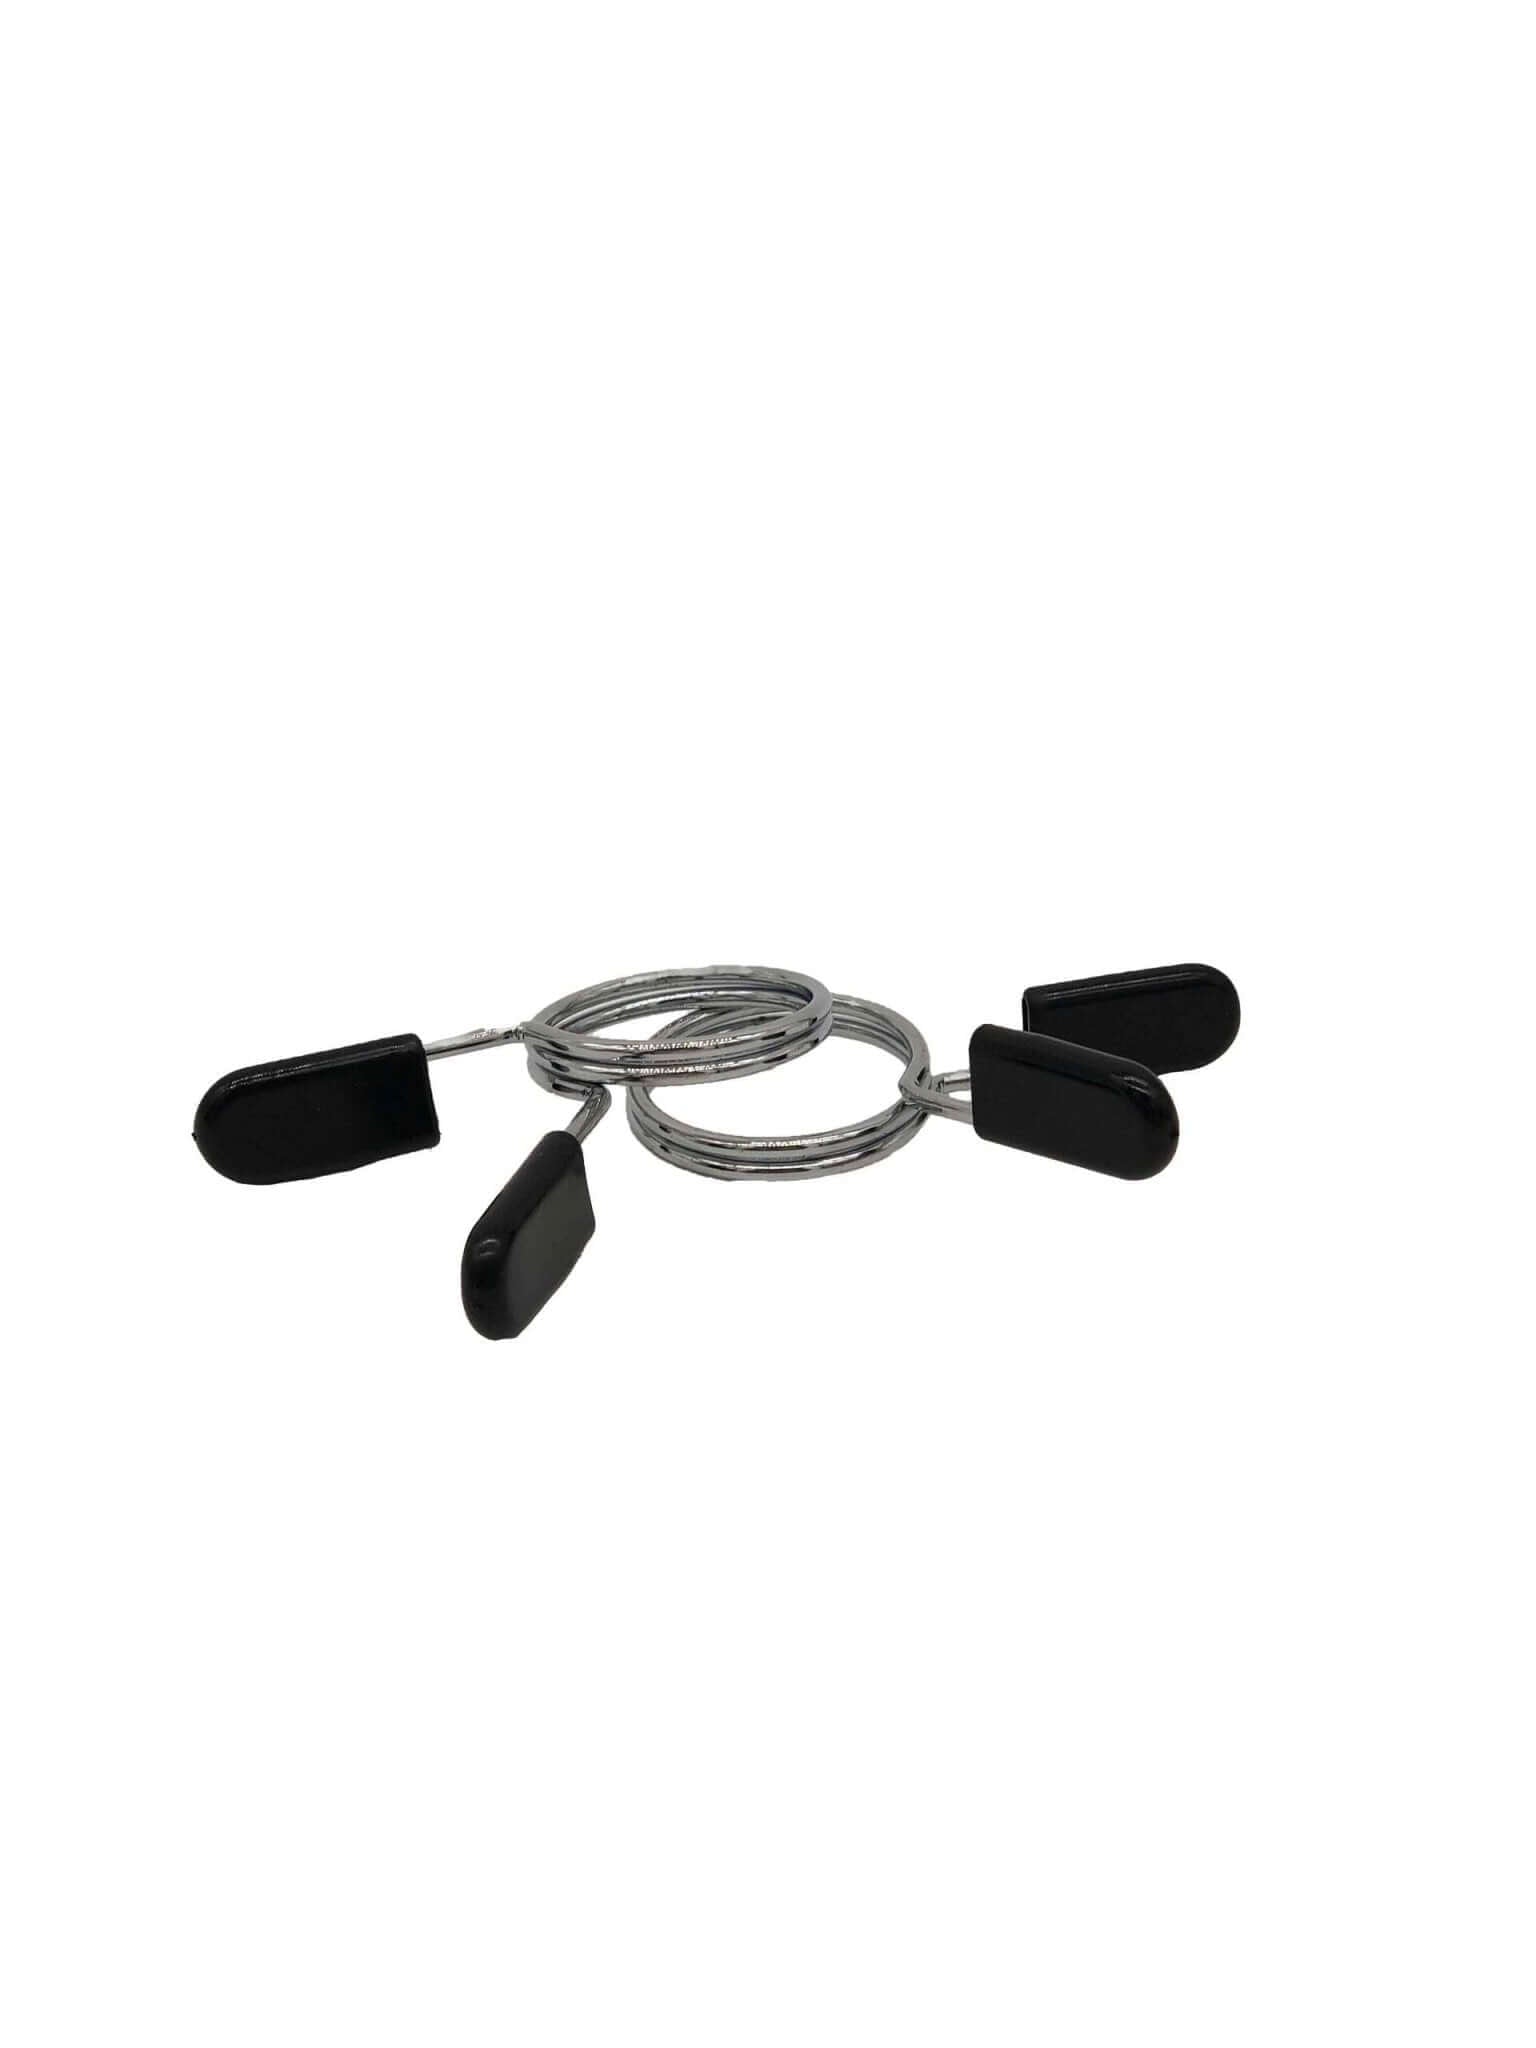 KEFL 2″ Olympic Barbell Spring Collar Set with Black Handle - KEFLUK